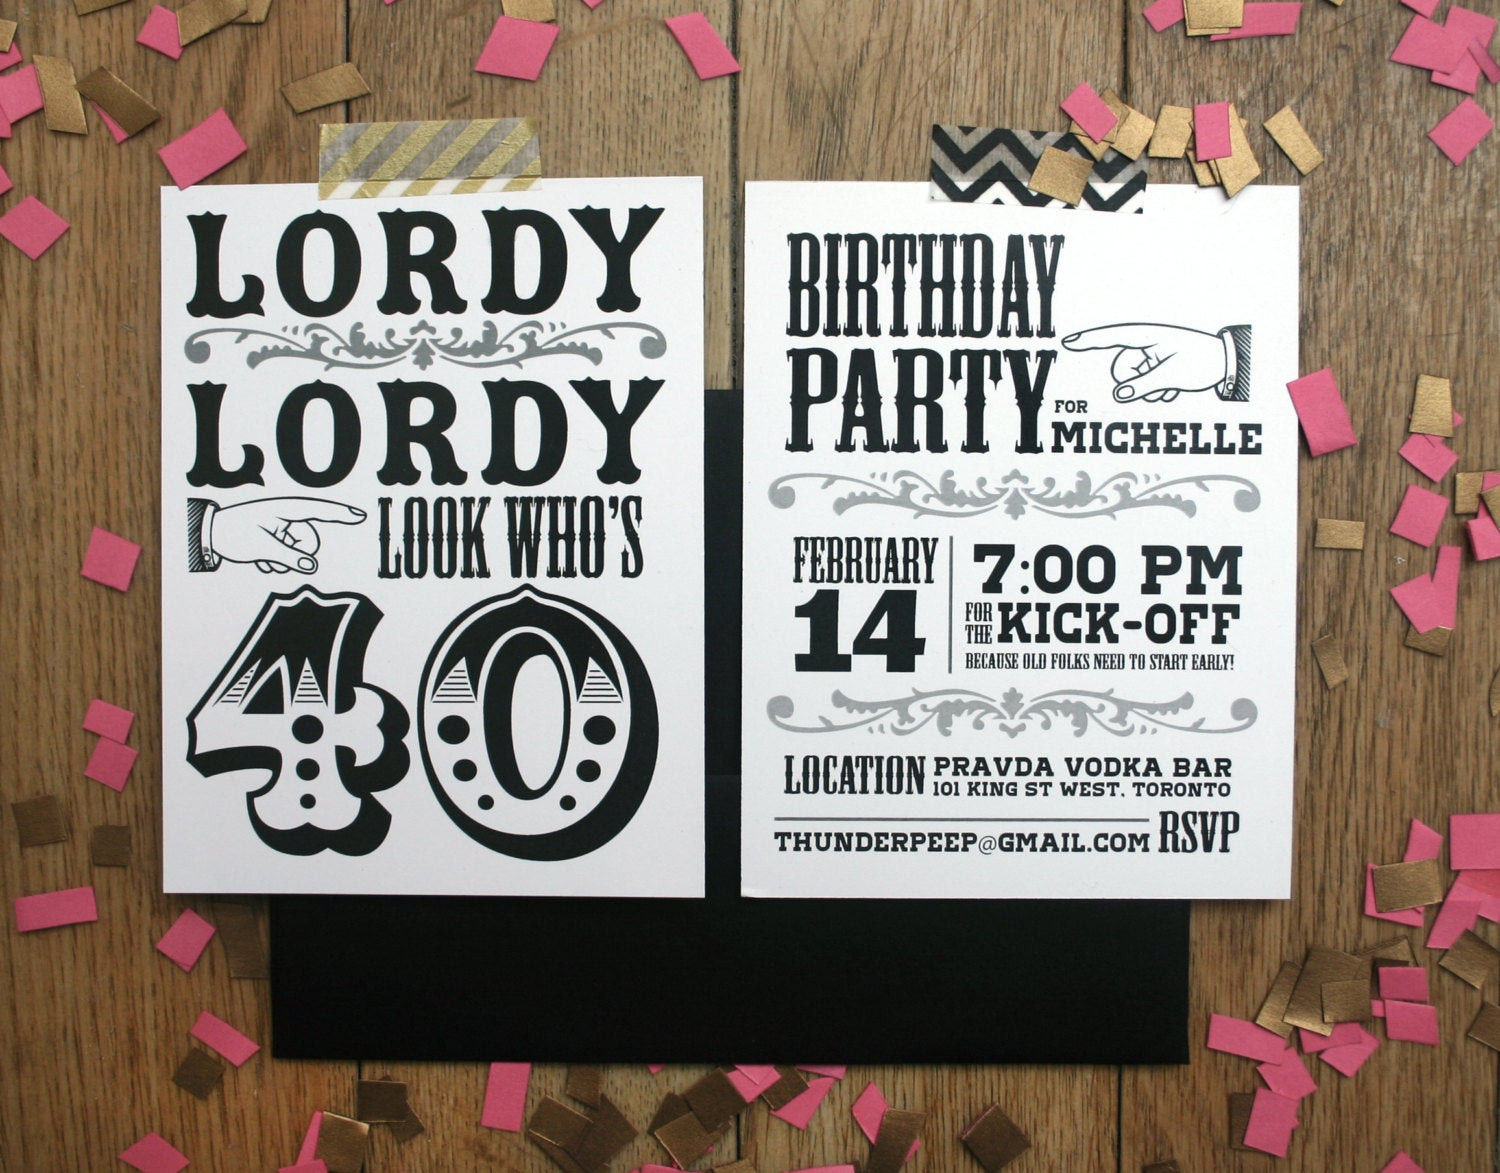 40 Birthday Invitations
 40th Birthday invitations Lordy Lordy look who s 40